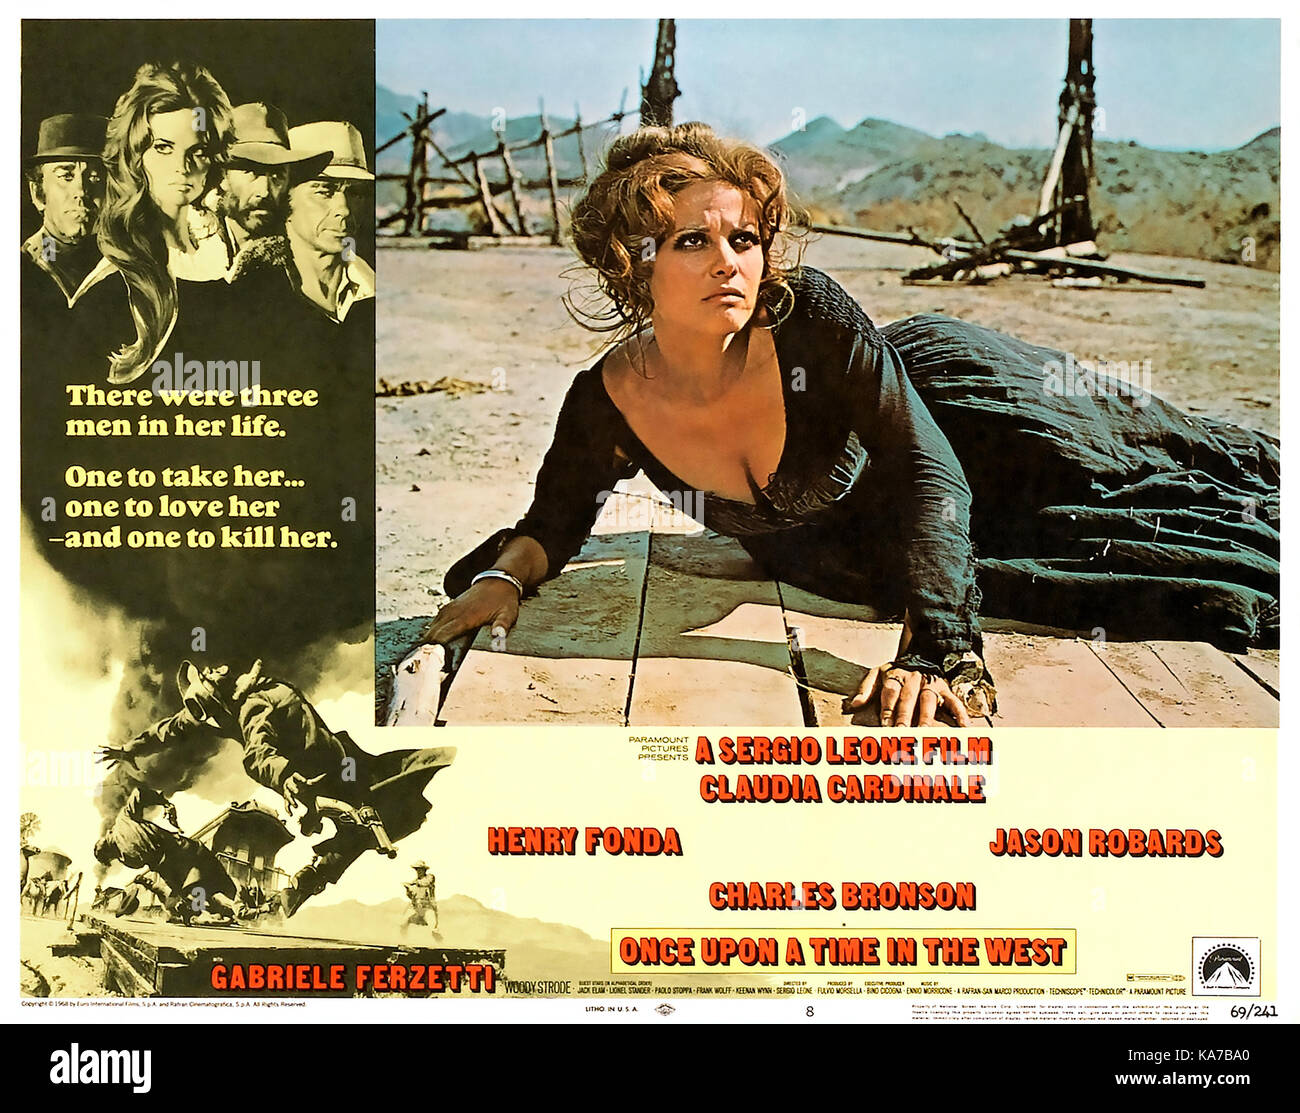 Es war EINMAL IM WESTEN 1968 Paramount Pictures Film mit Claudia Cardinale  Stockfotografie - Alamy